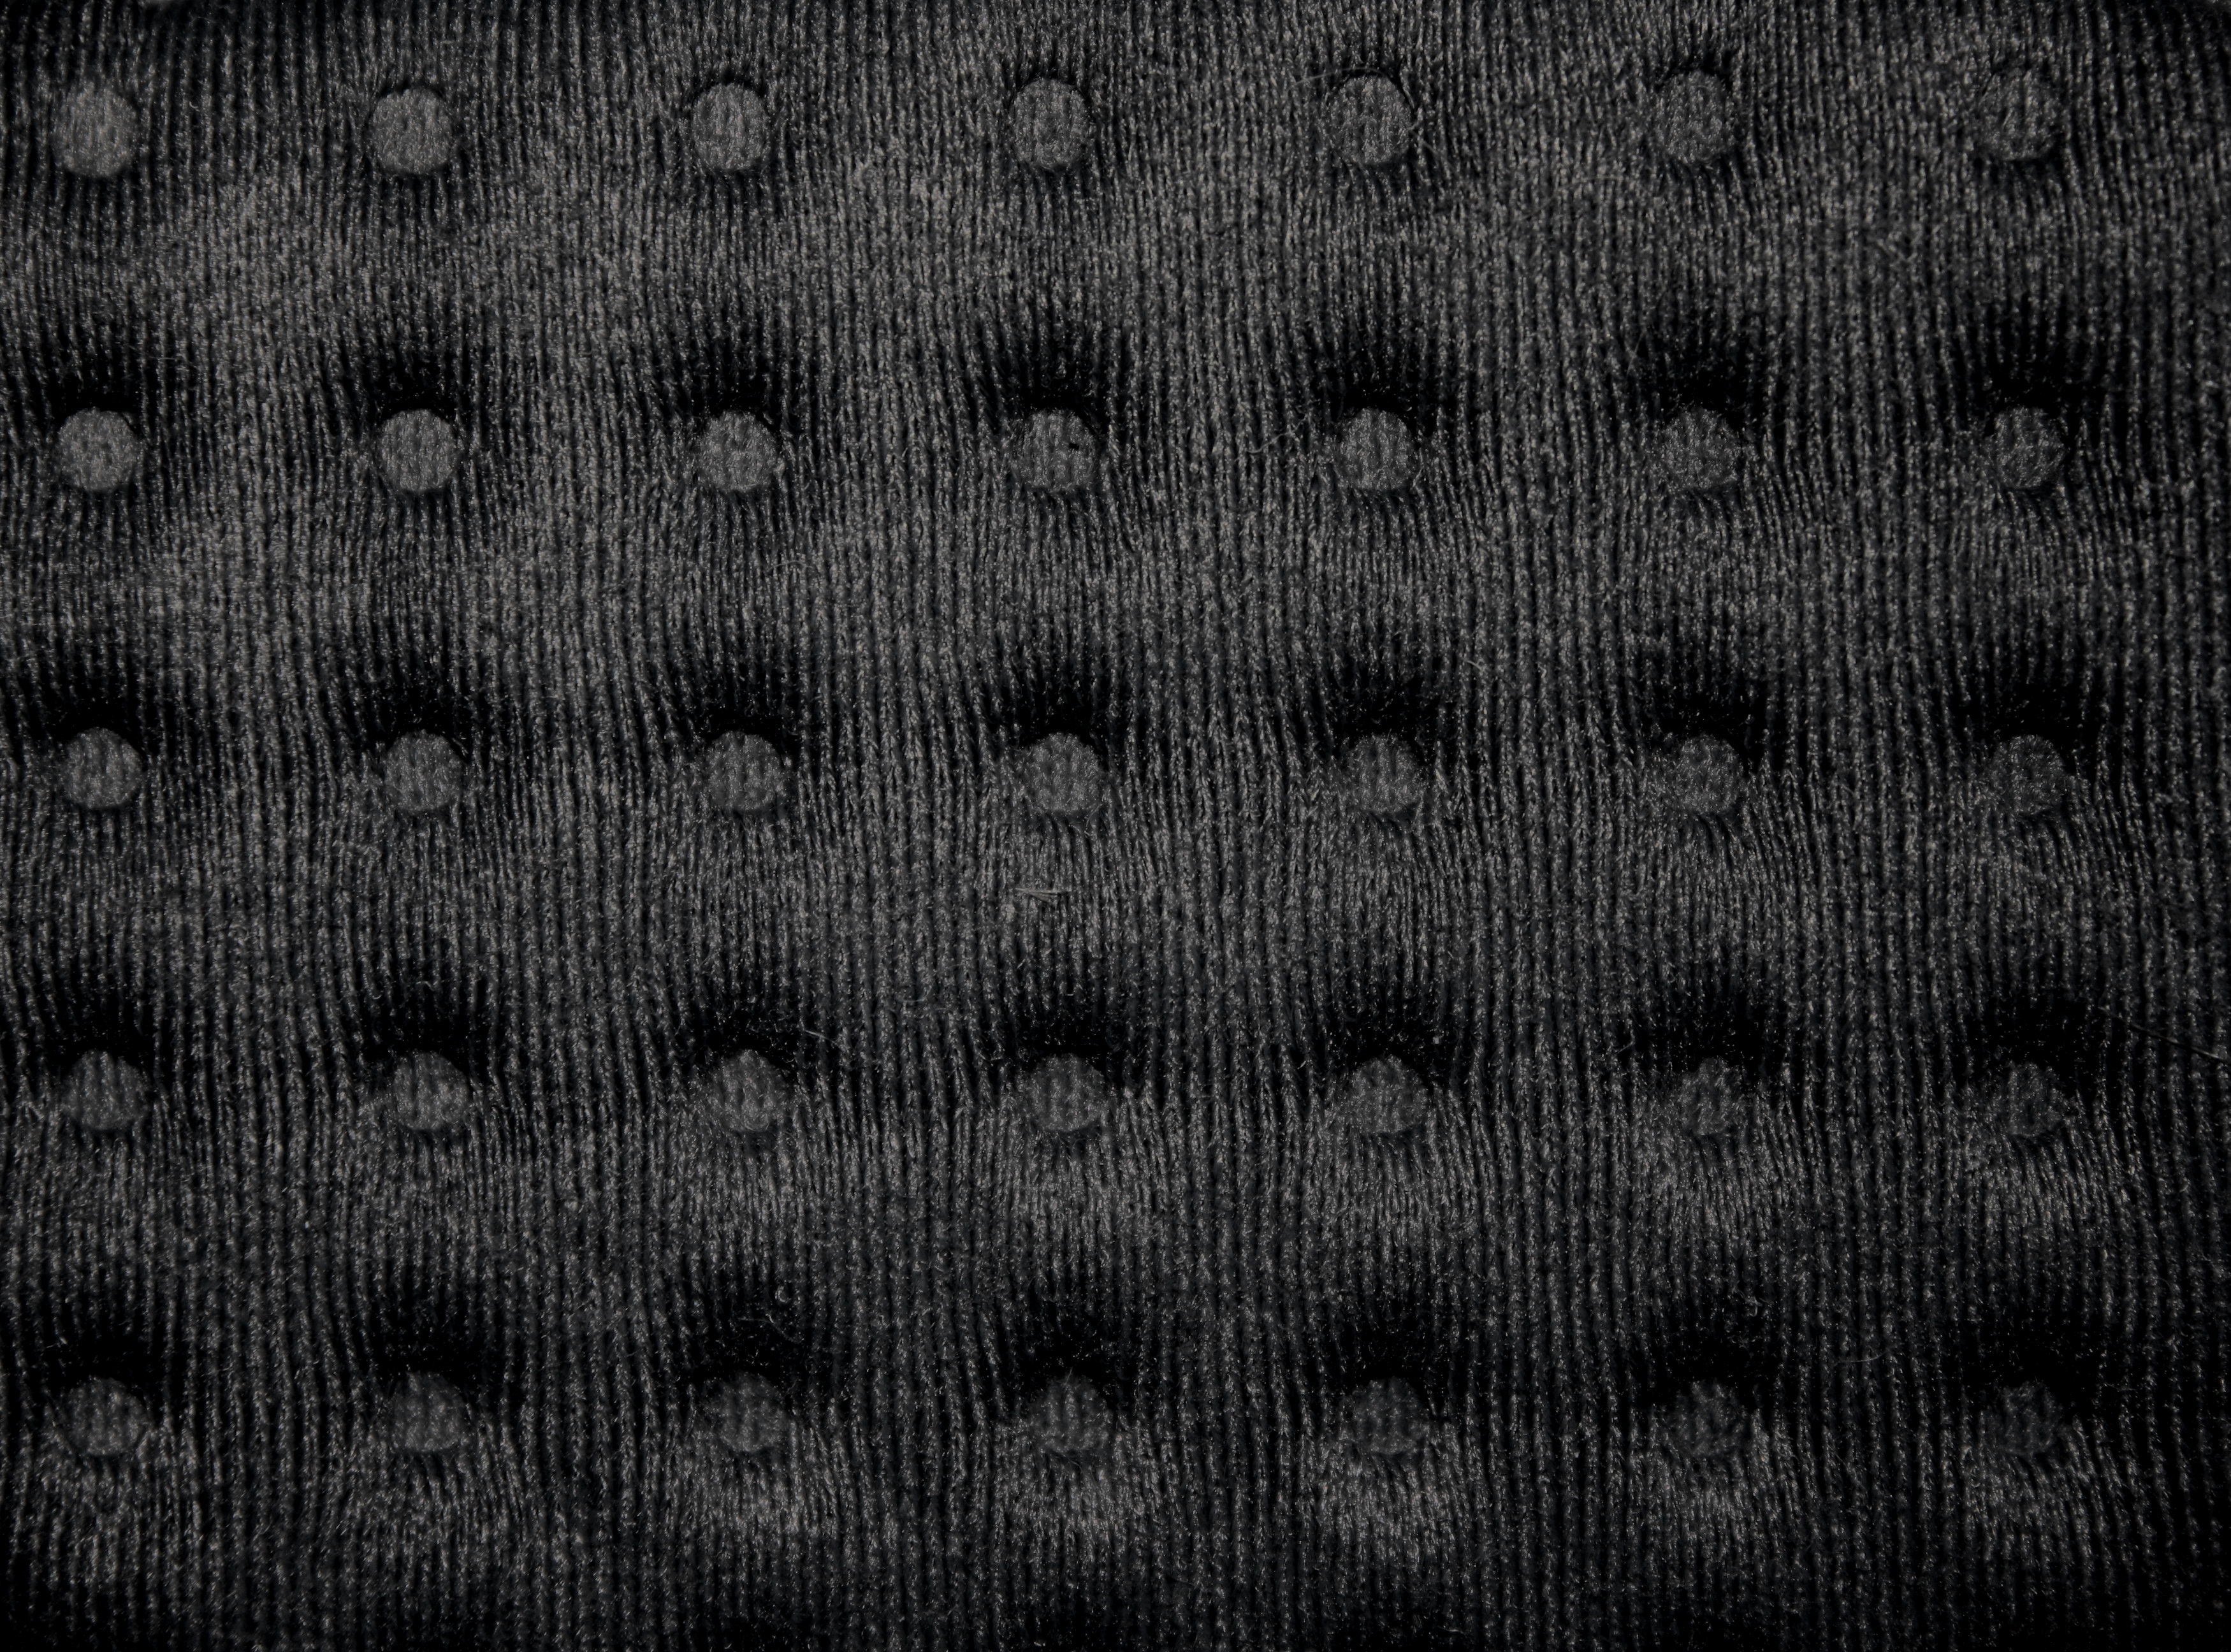 Black Tufted Fabric Texture Picture Free Photograph Photos Public Domain